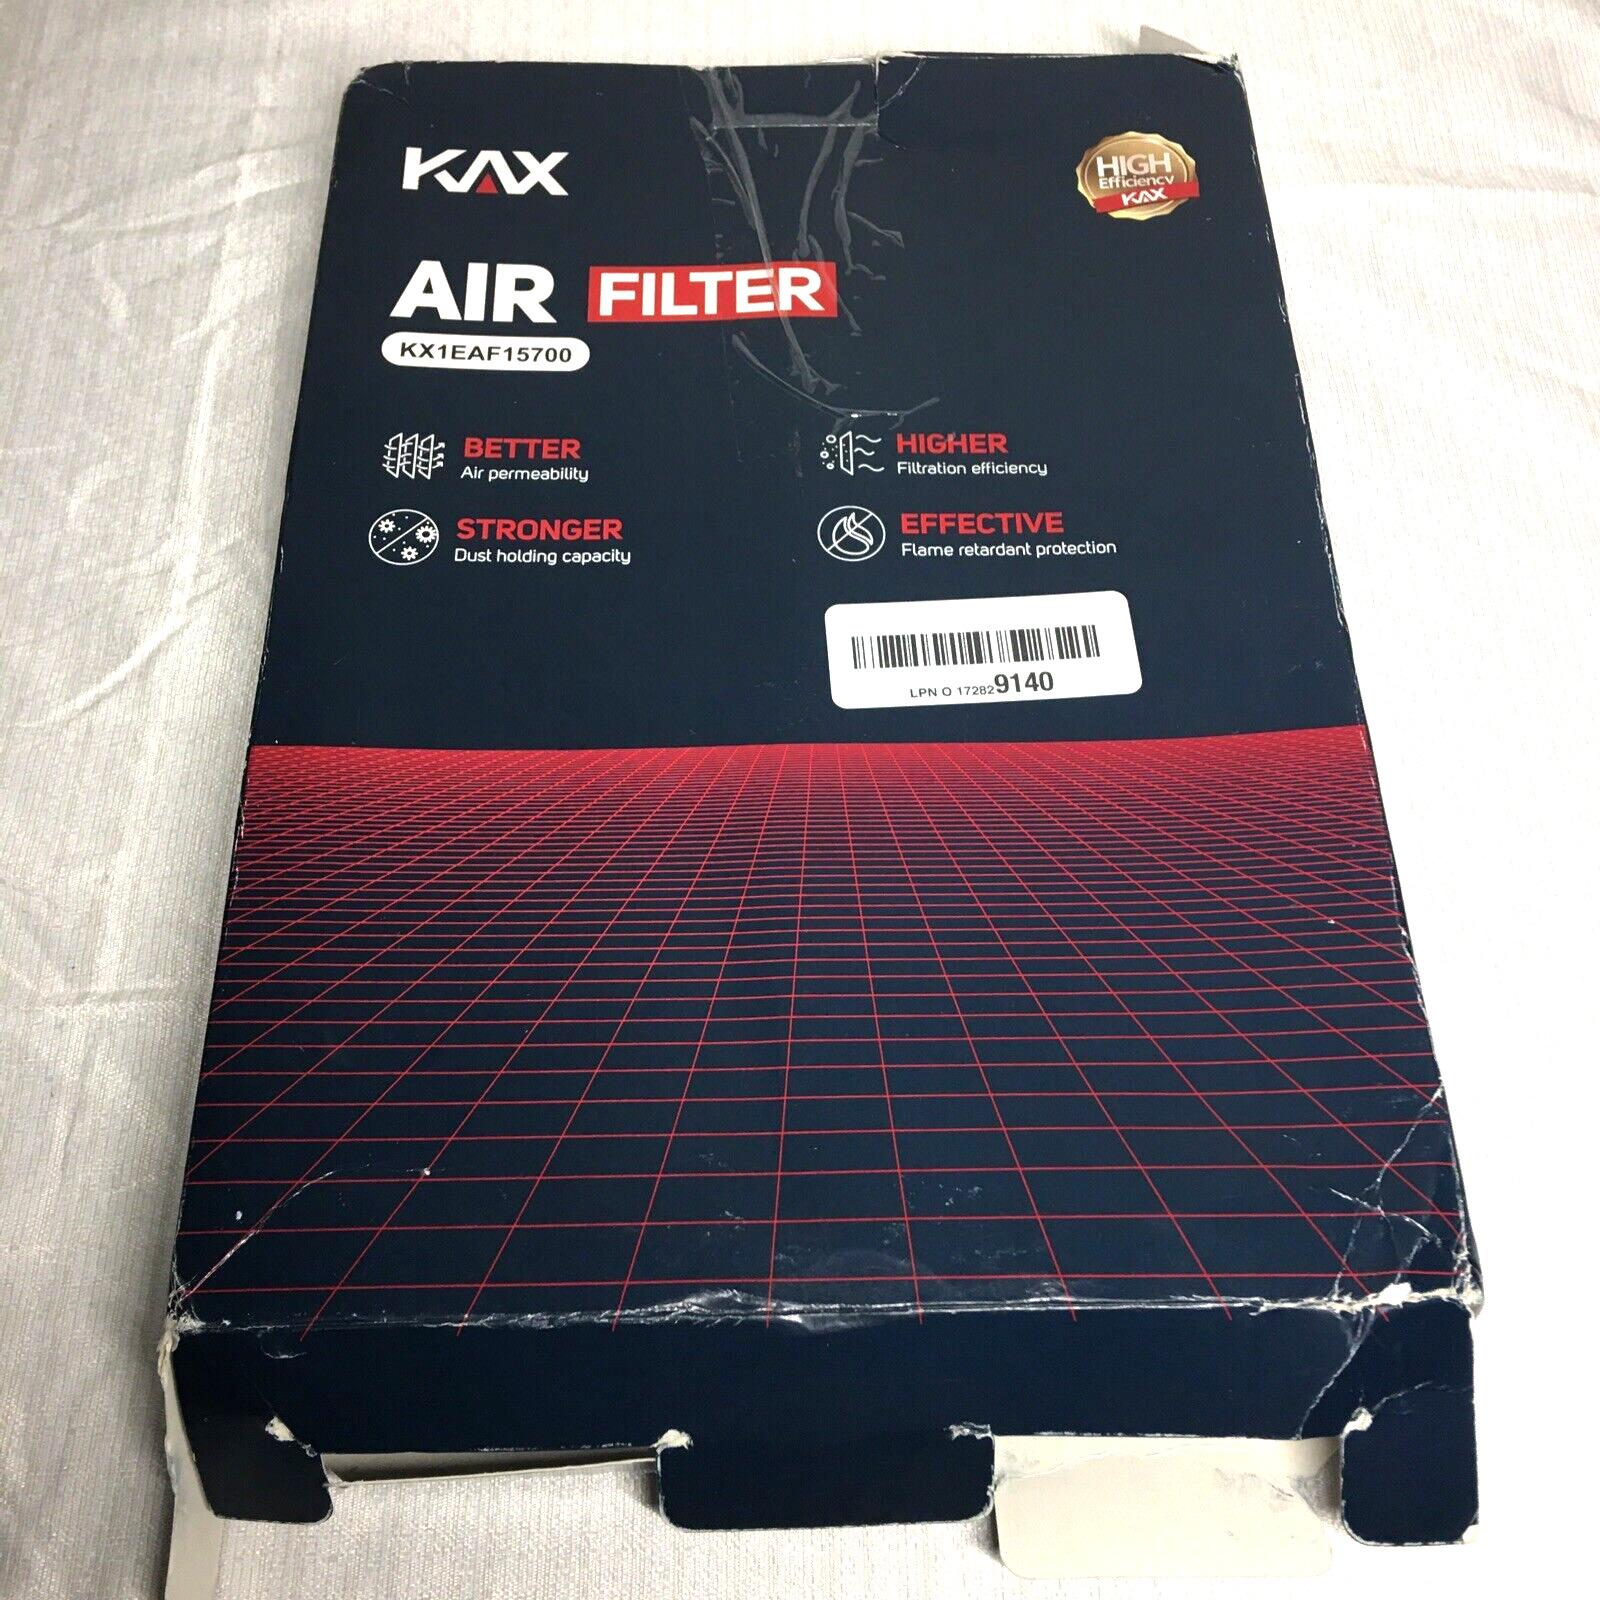 KAX Air Filter KX1EAF15700